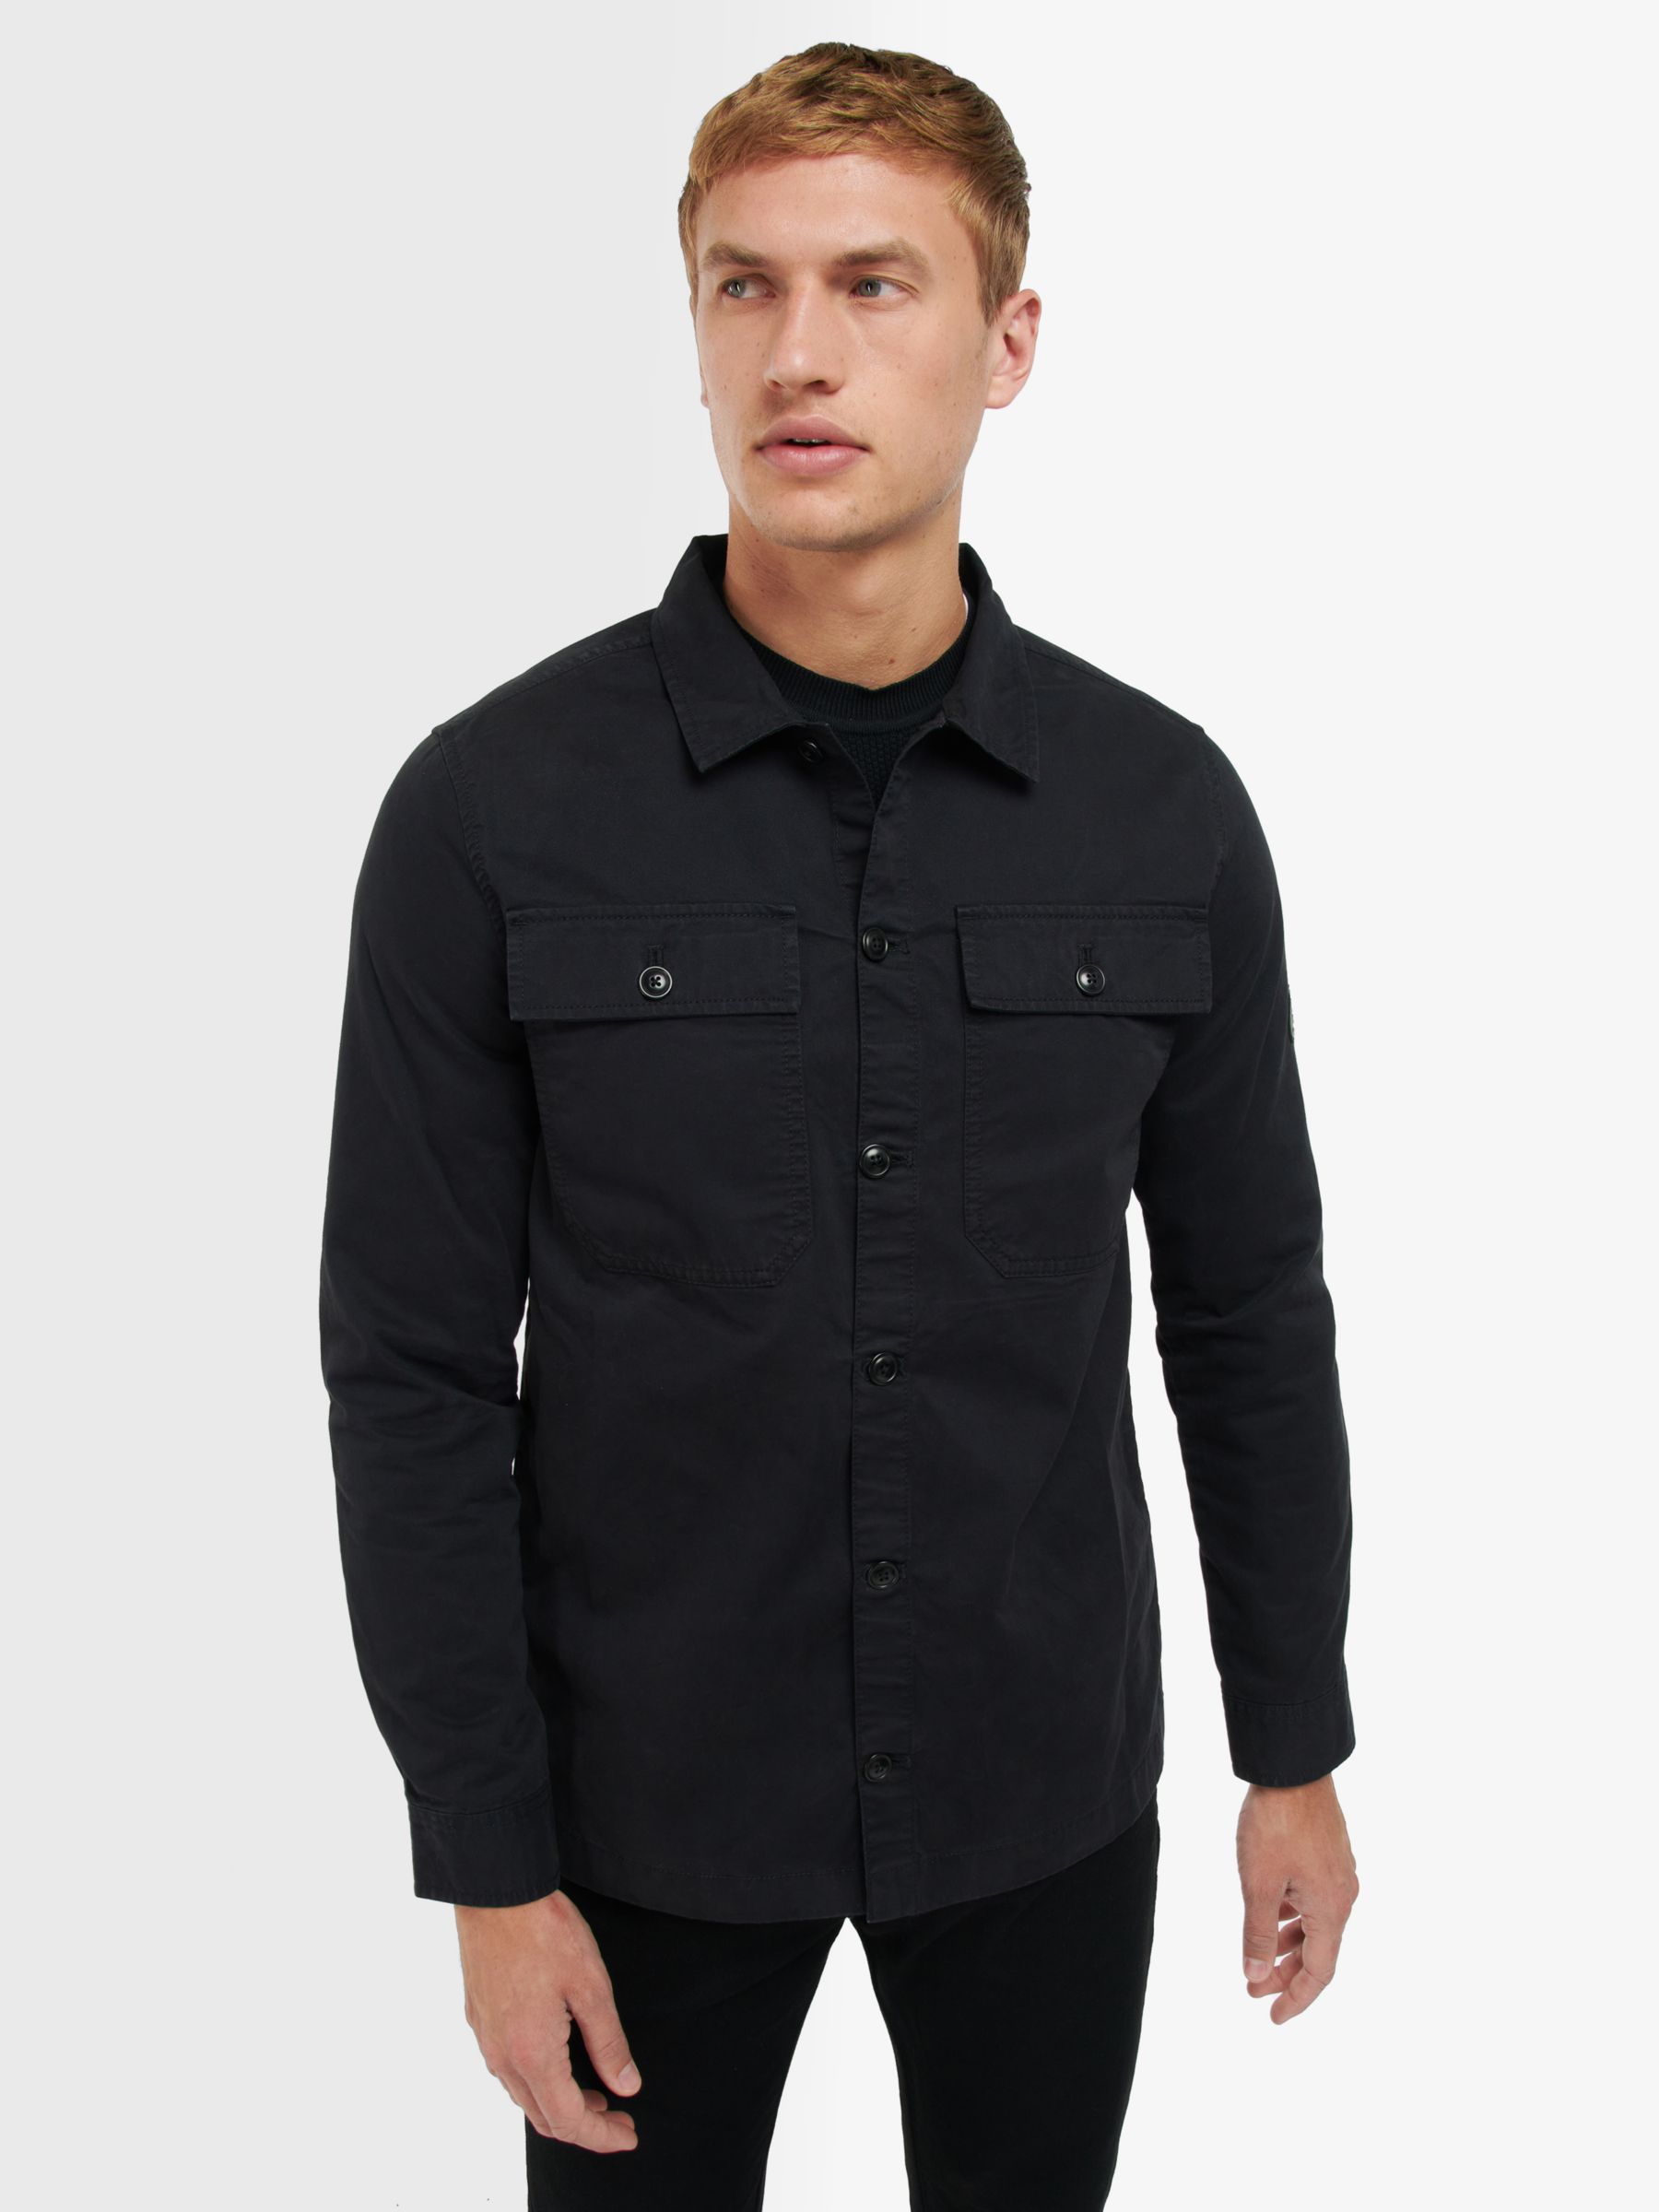 Men's Black Casual Shirts